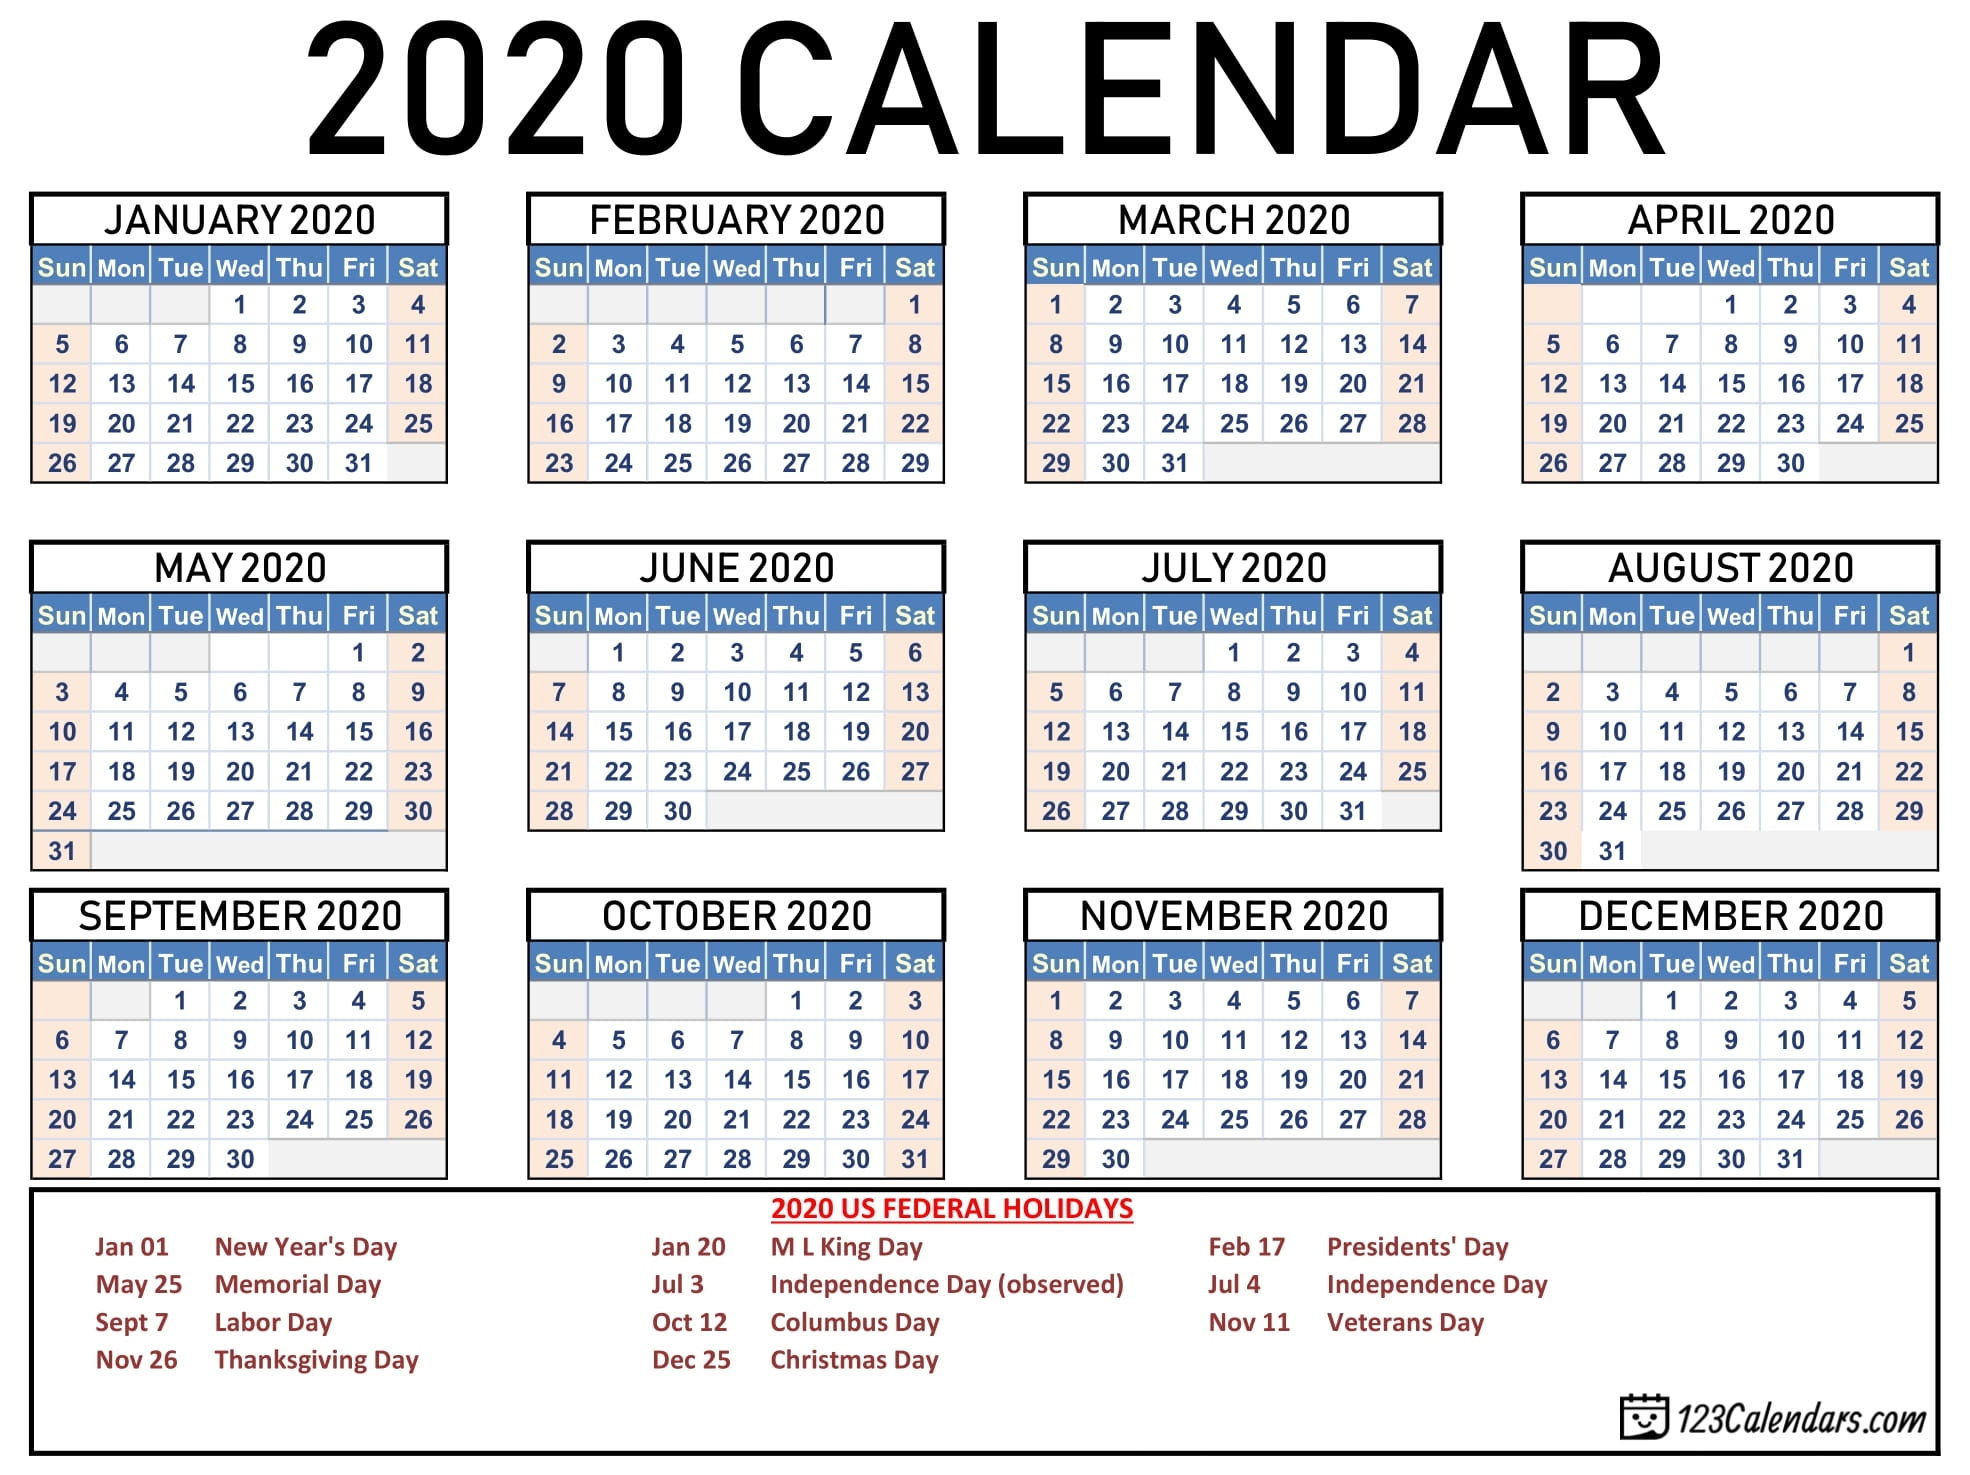 Free Printable 2020 Calendar | 123Calendars Dashing 2020 Calender With Numbered Days